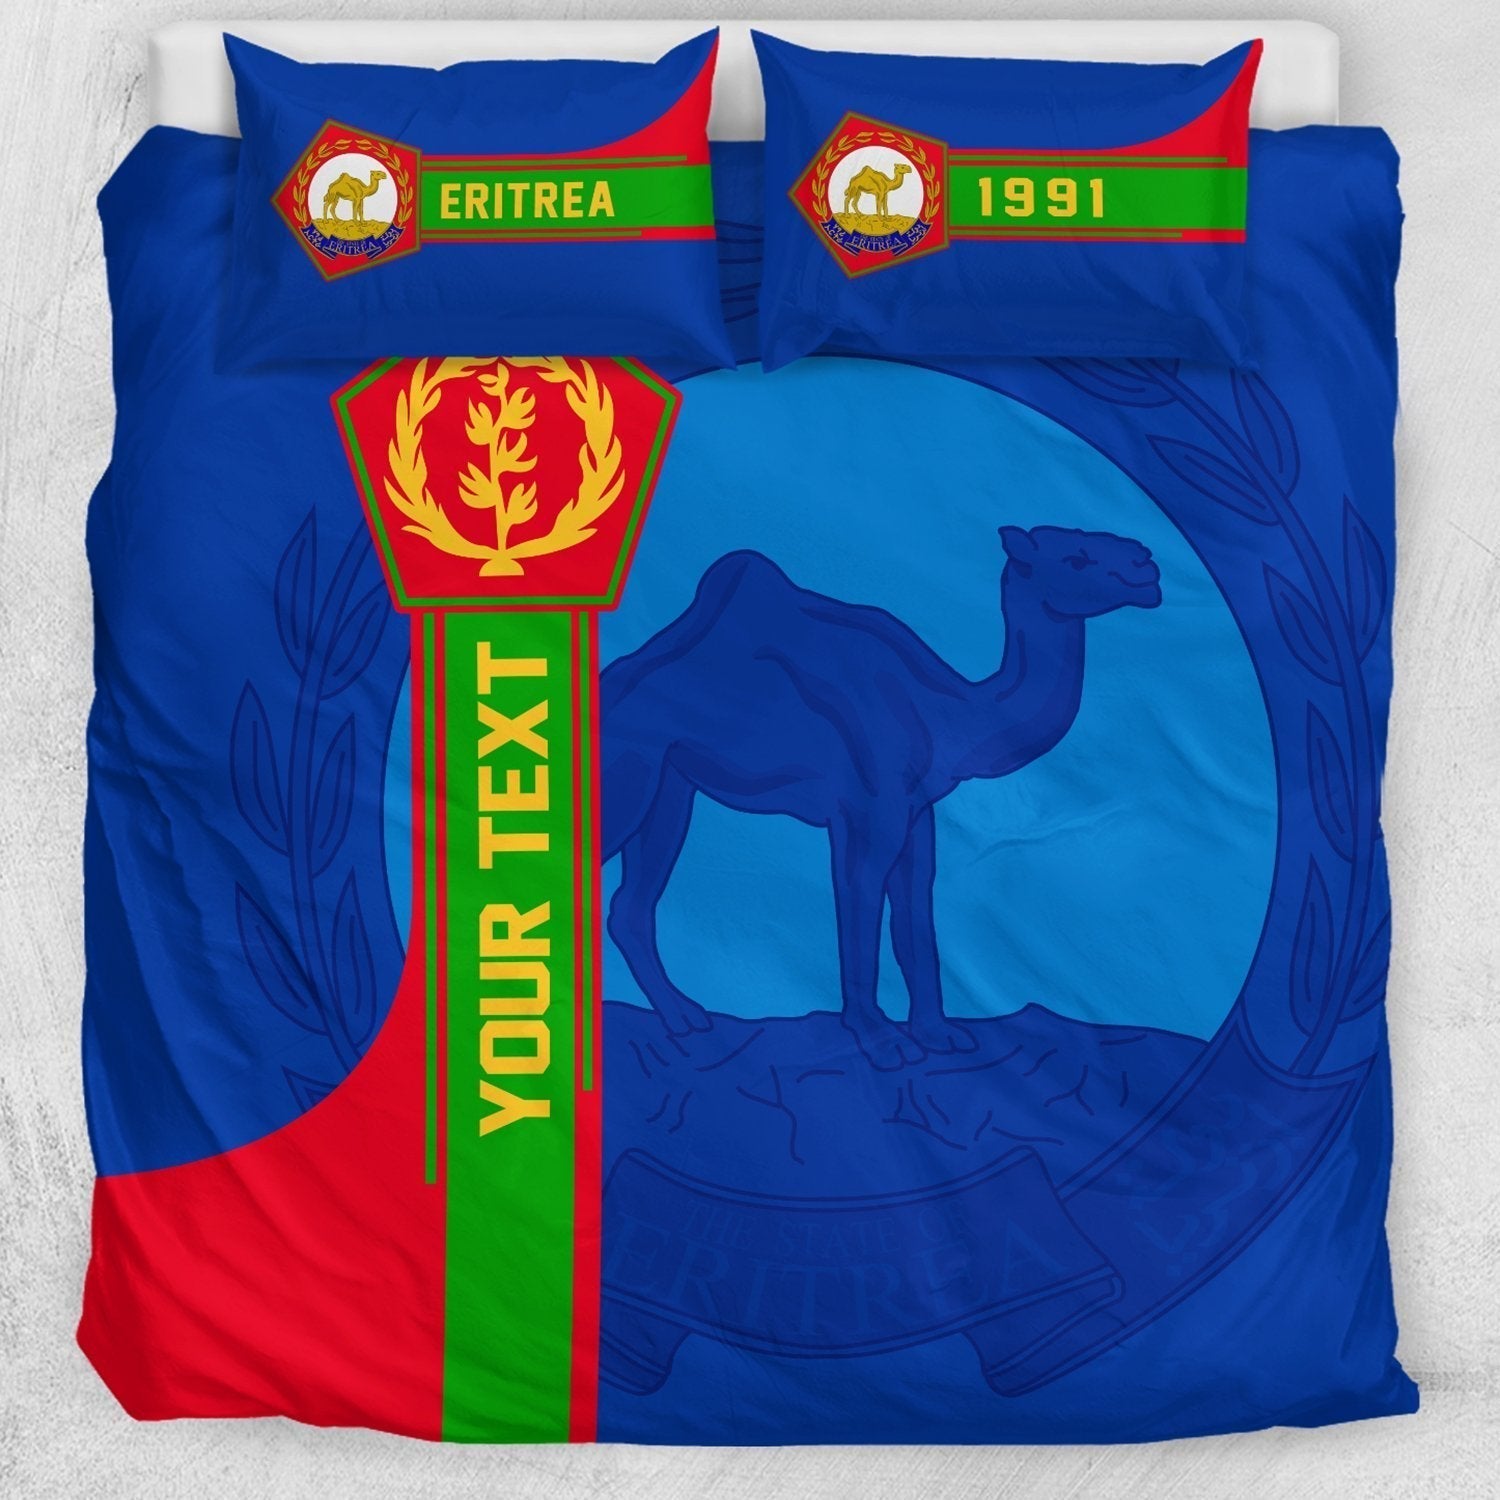 custom-african-bedding-set-eritrea-duvet-cover-pillow-cases-pentagon-style